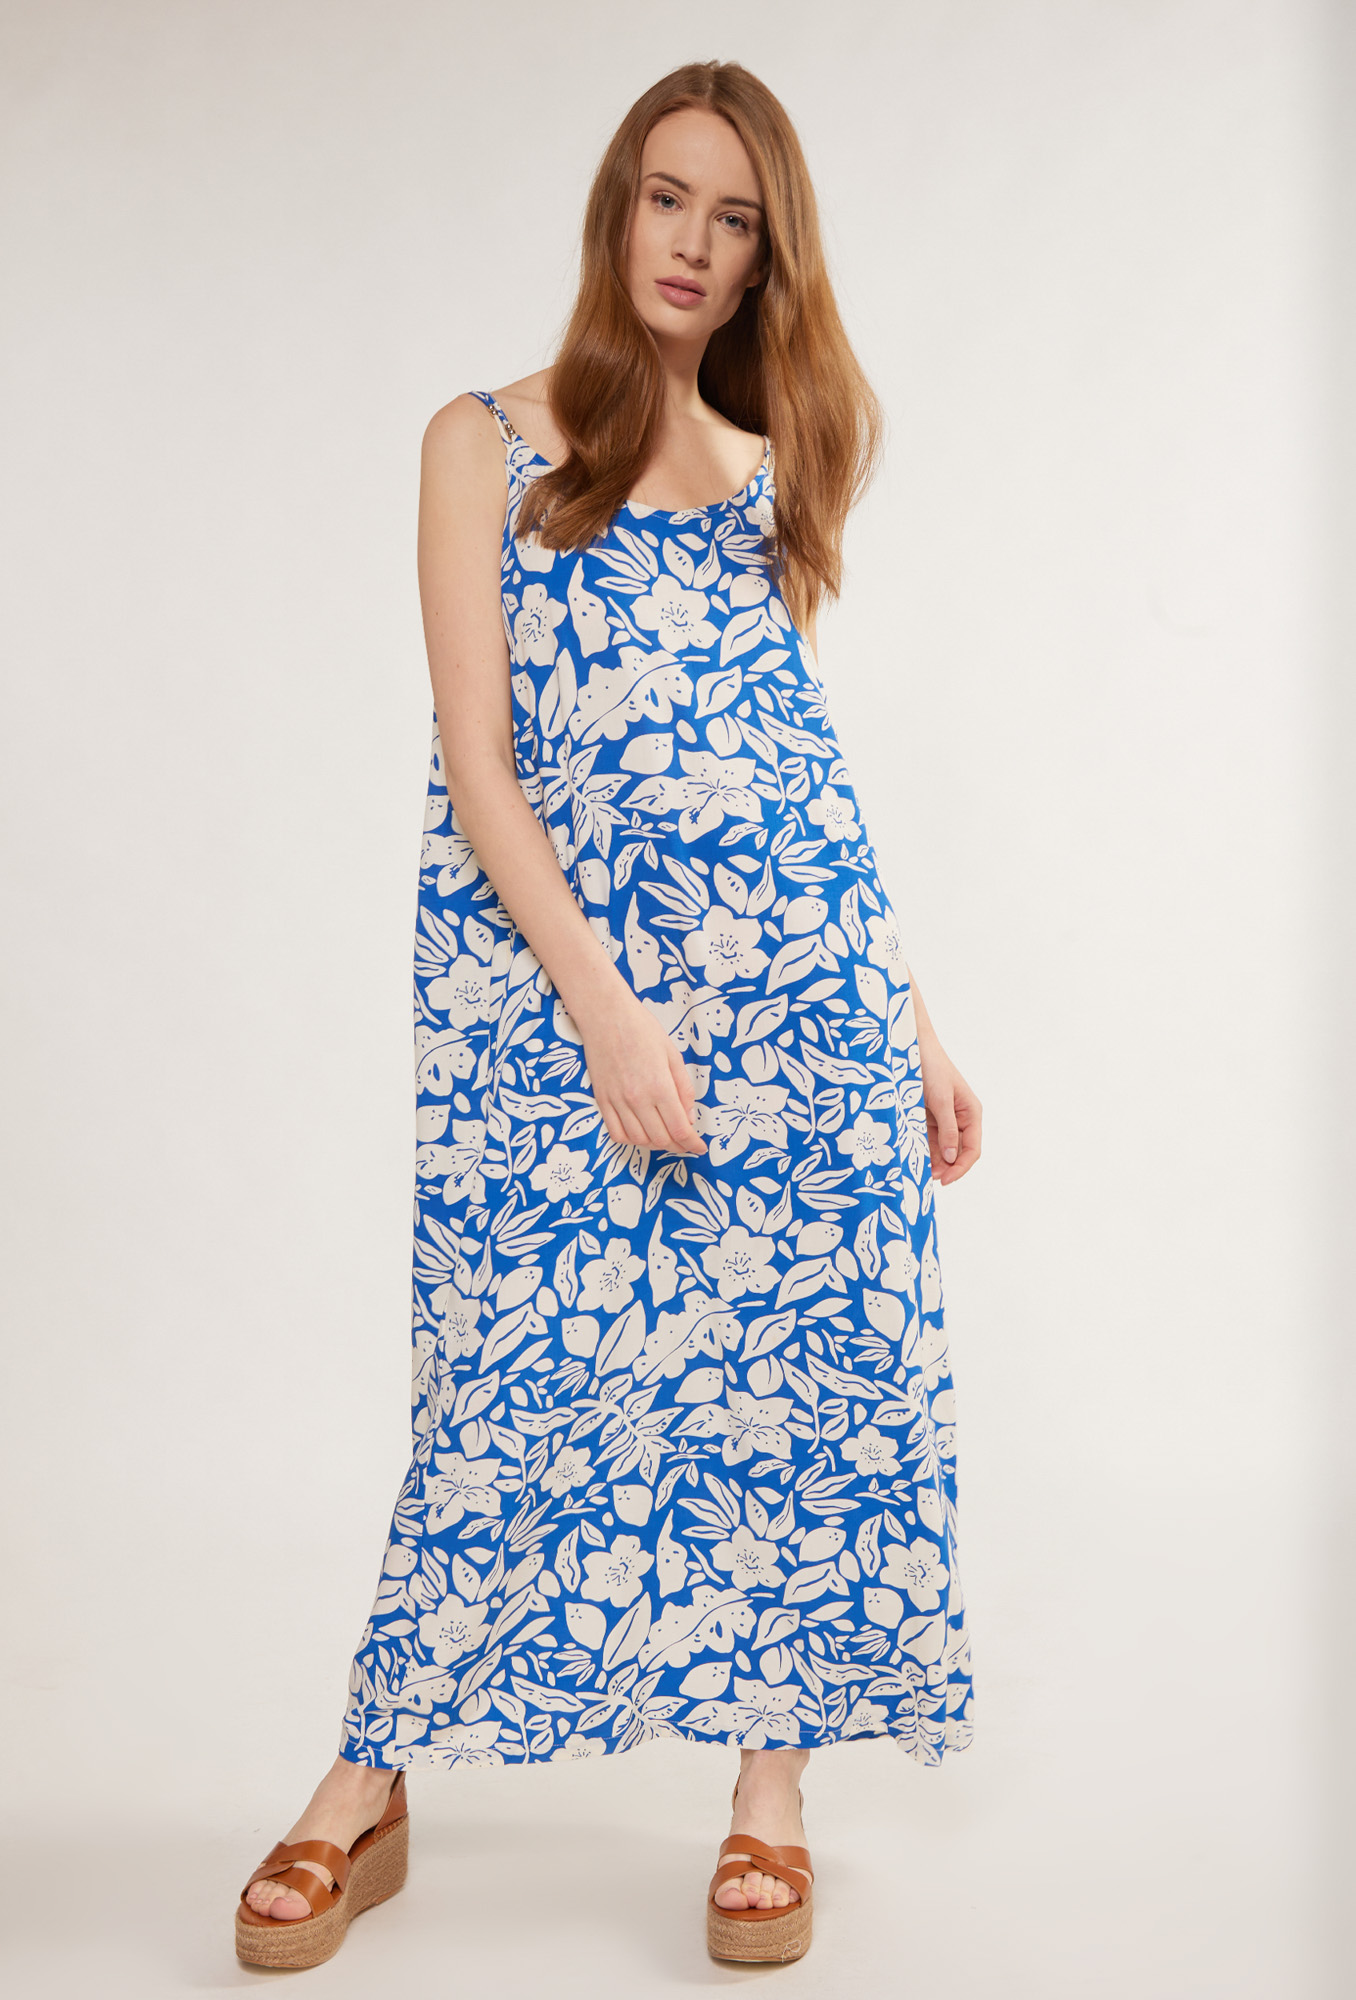 MONNARI Woman's Maxi Dresses Patterned Maxi Dress Multi Blue